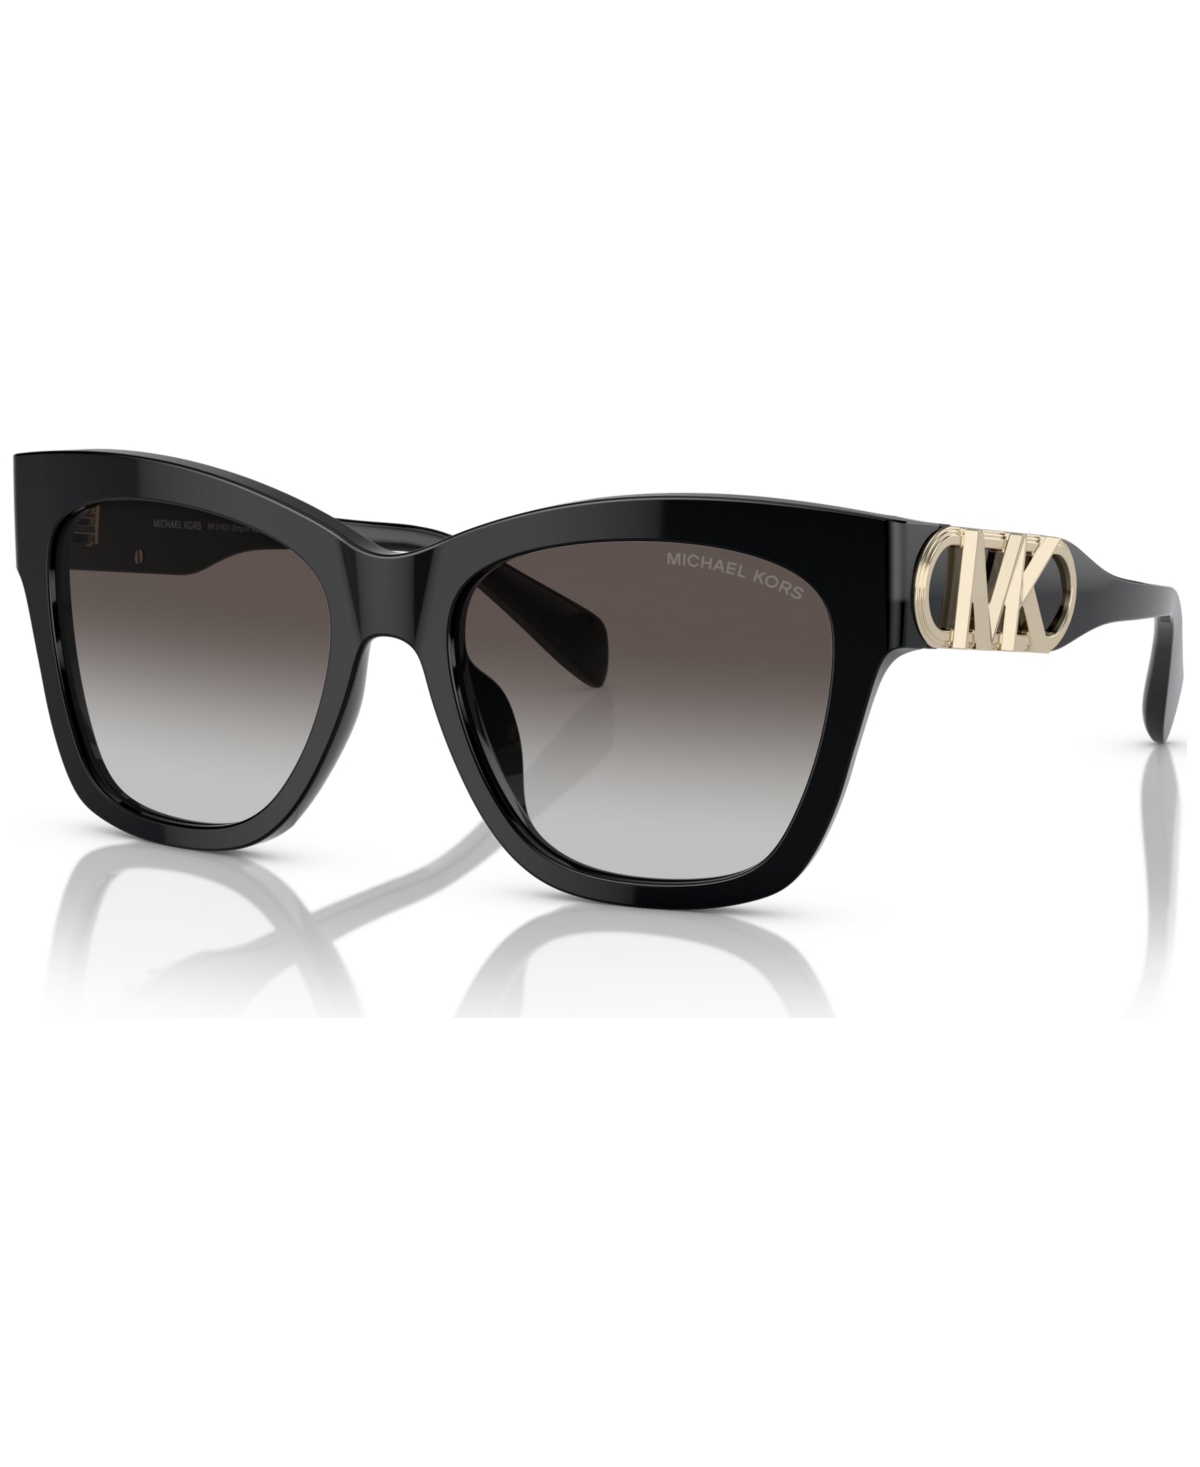 Michael Kors Women's Sunglasses, Empire Square In Black